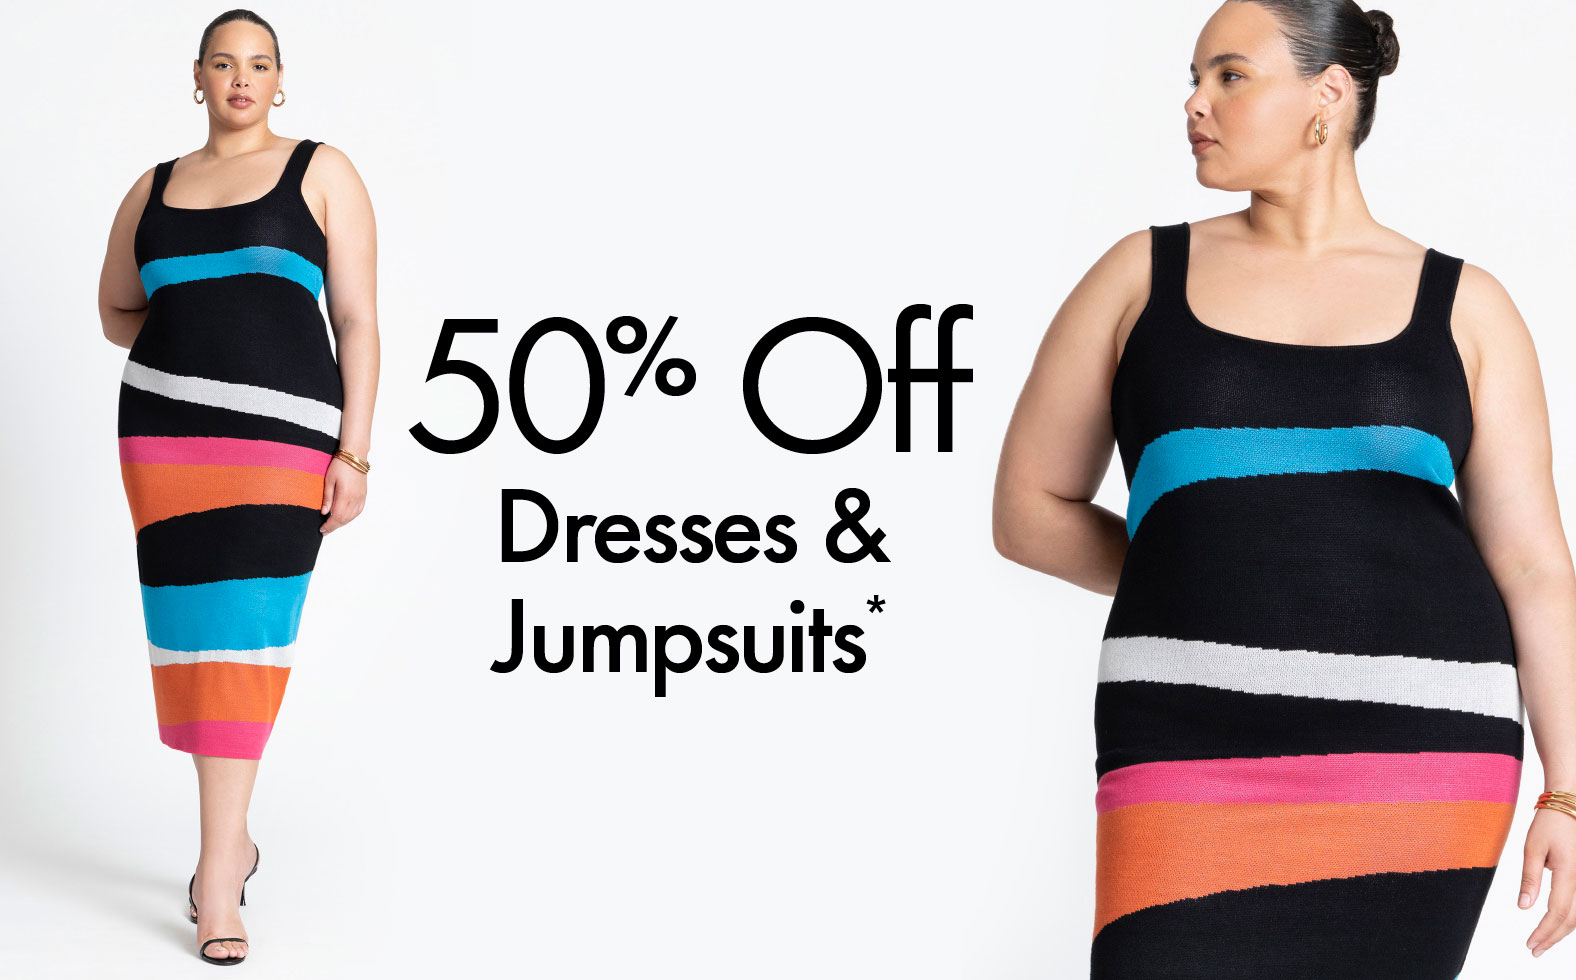 50% Off Dresses & Jumpsuits*